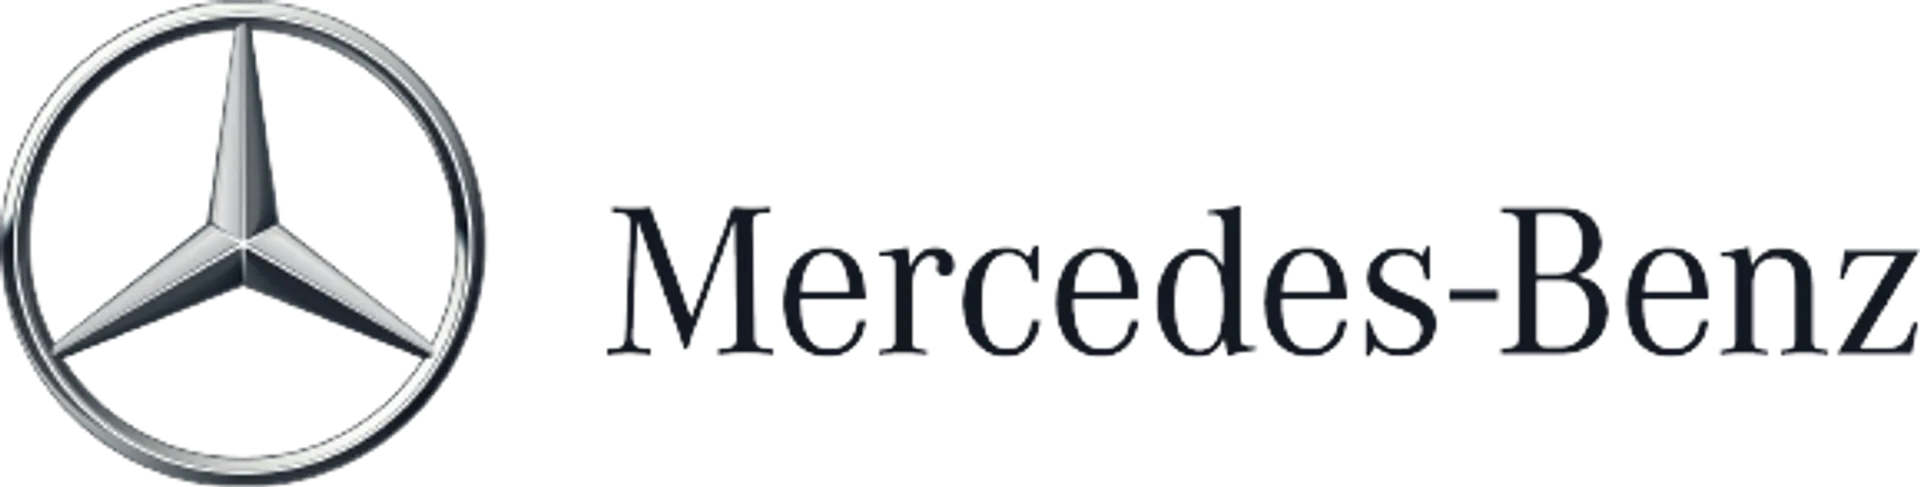 MERCEDES BENZ logo die aktuell Flugblatt